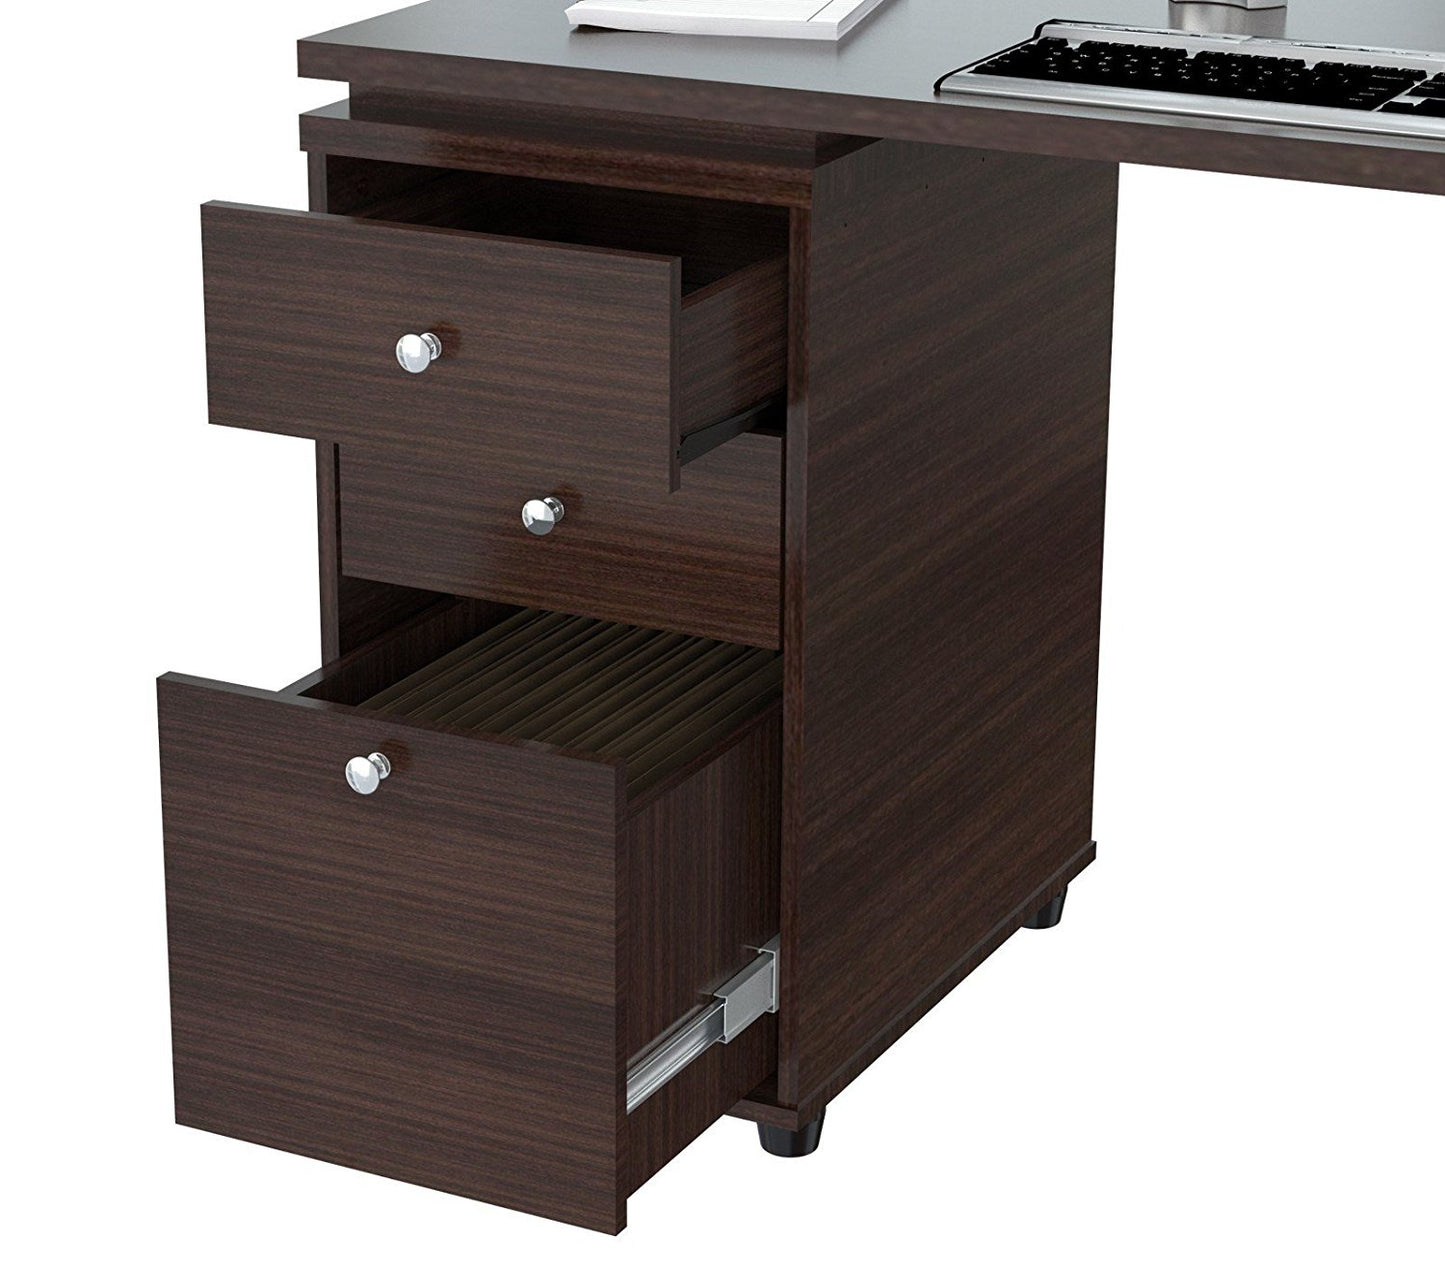 60" Espresso Mirrored L Shape Computer Desk With Three Drawers